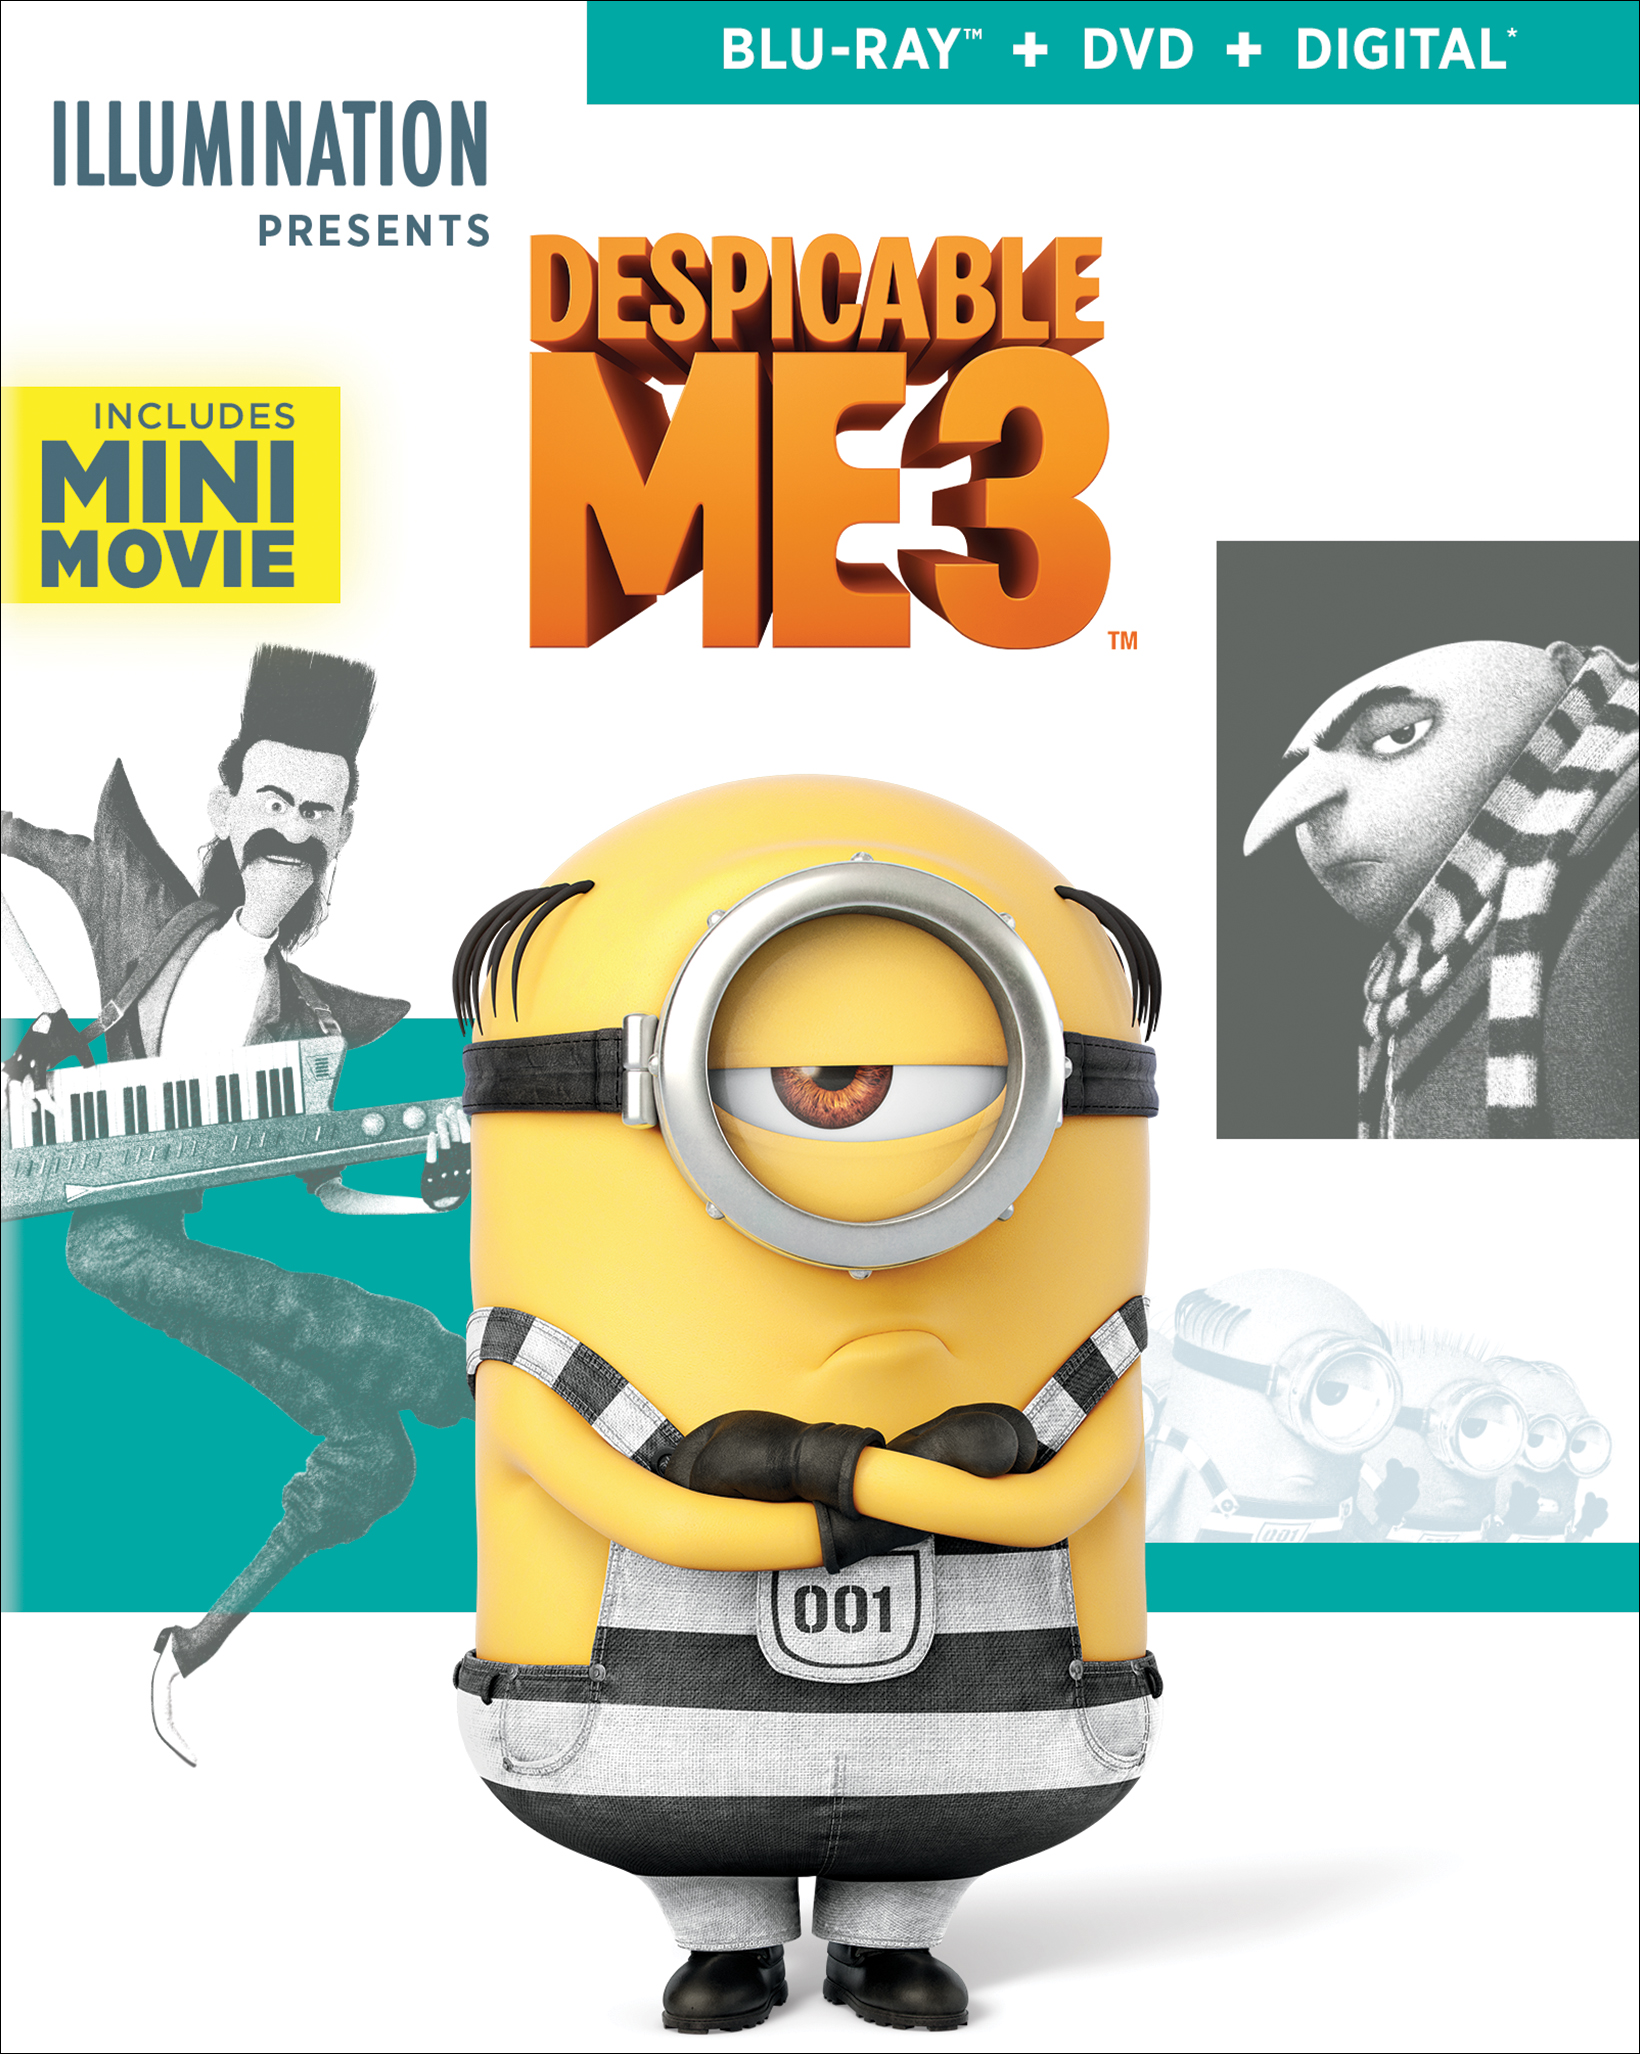 Despicable Me 3 Gift Set Blu-ray/DVD Combo